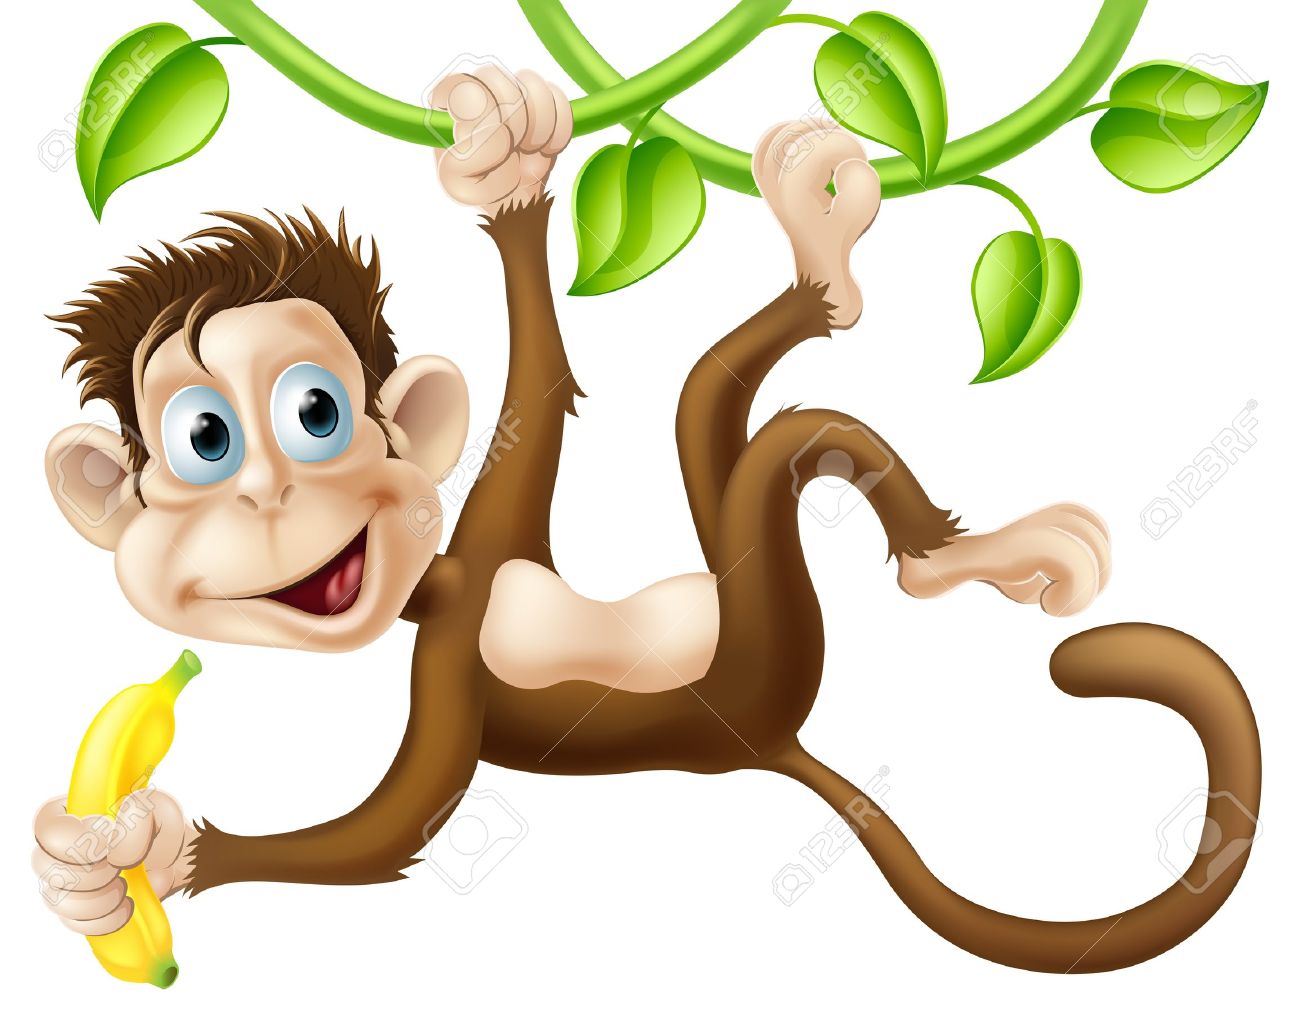 Monkey swinging on vine